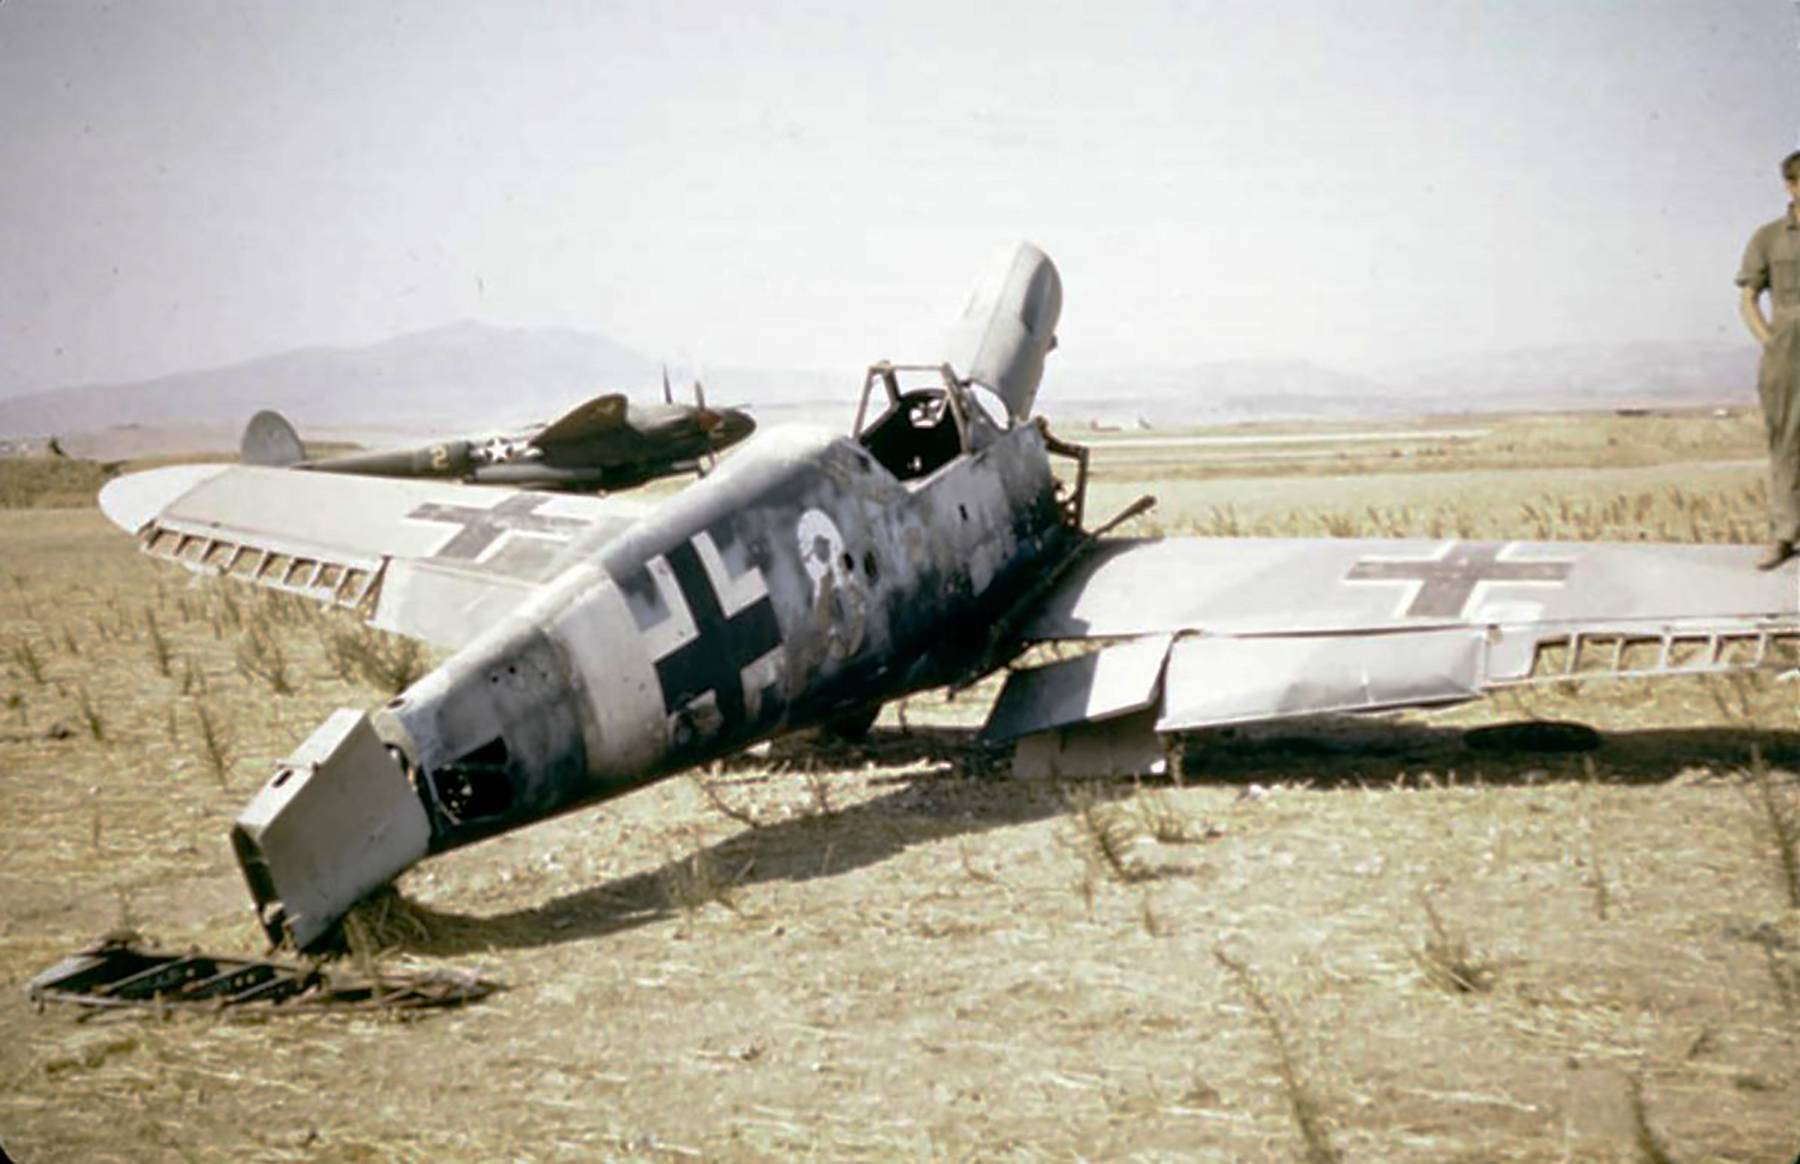 MTO Messerschmitt Bf 109G2 White 8 abandoned airframe North Africa 01